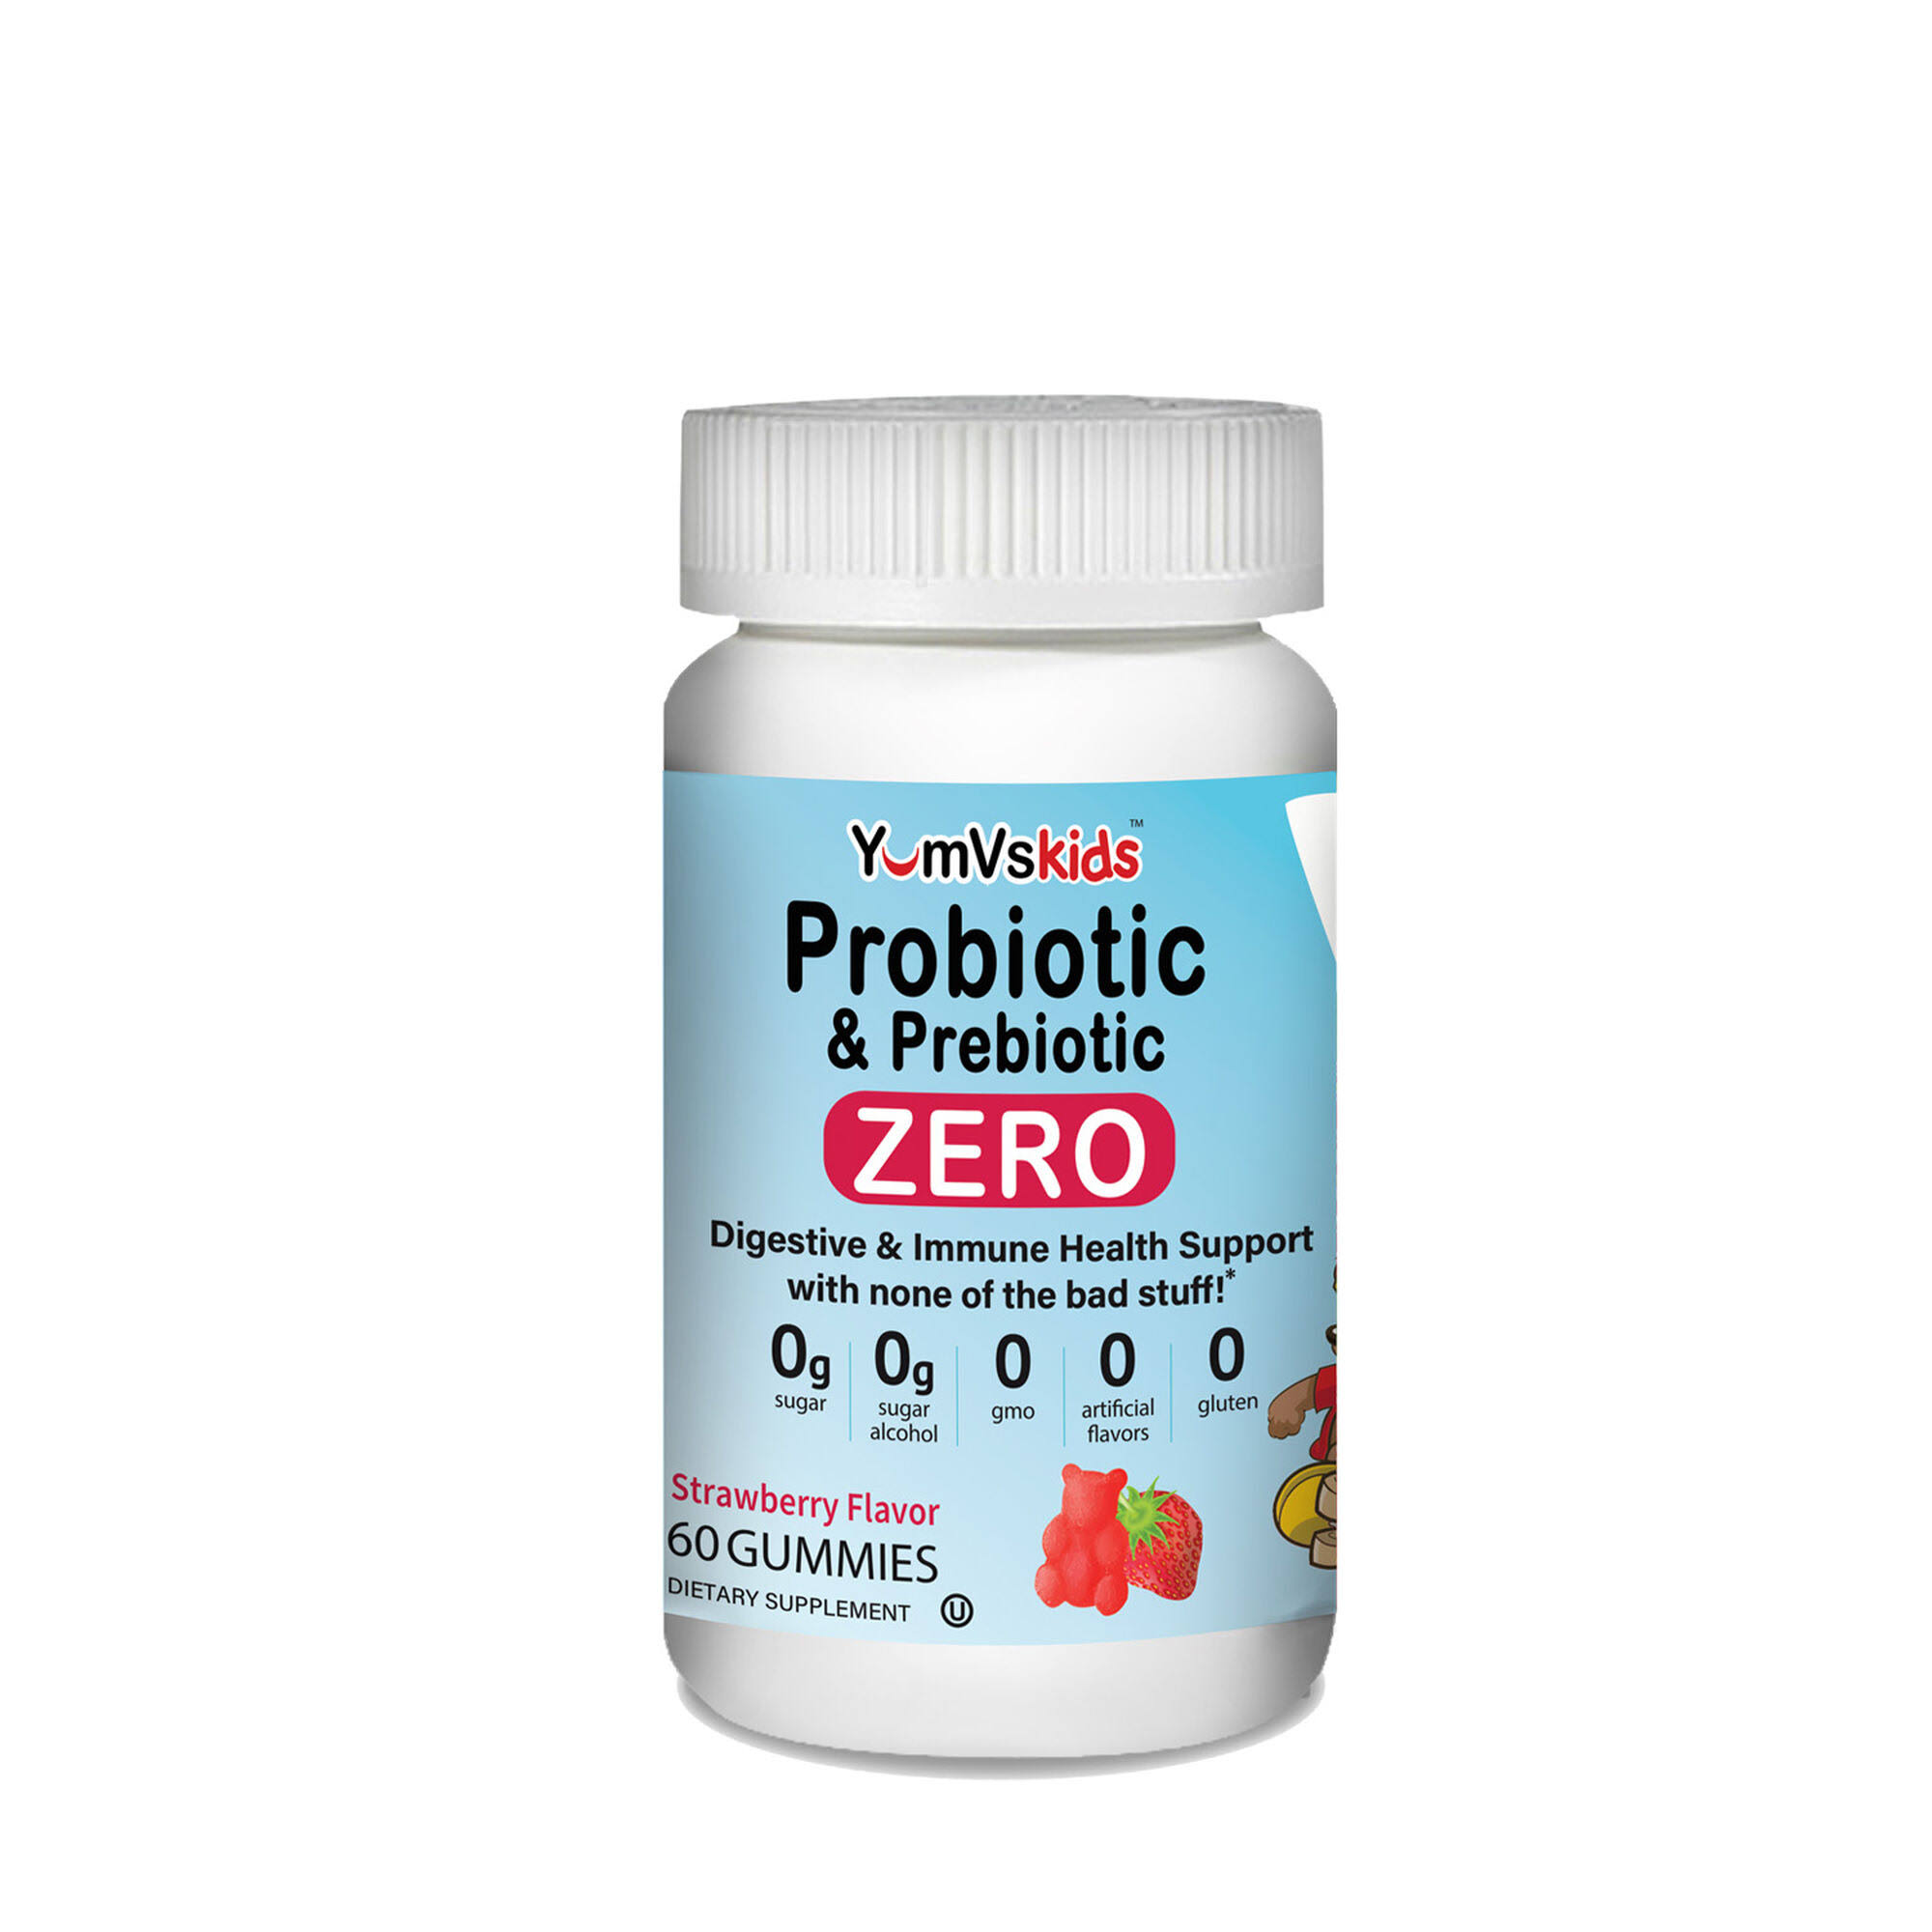 Yumvs Kids Zero Probiotic & Prebiotic, Zero, Gummies, Strawberry Flavor - 60 gummies